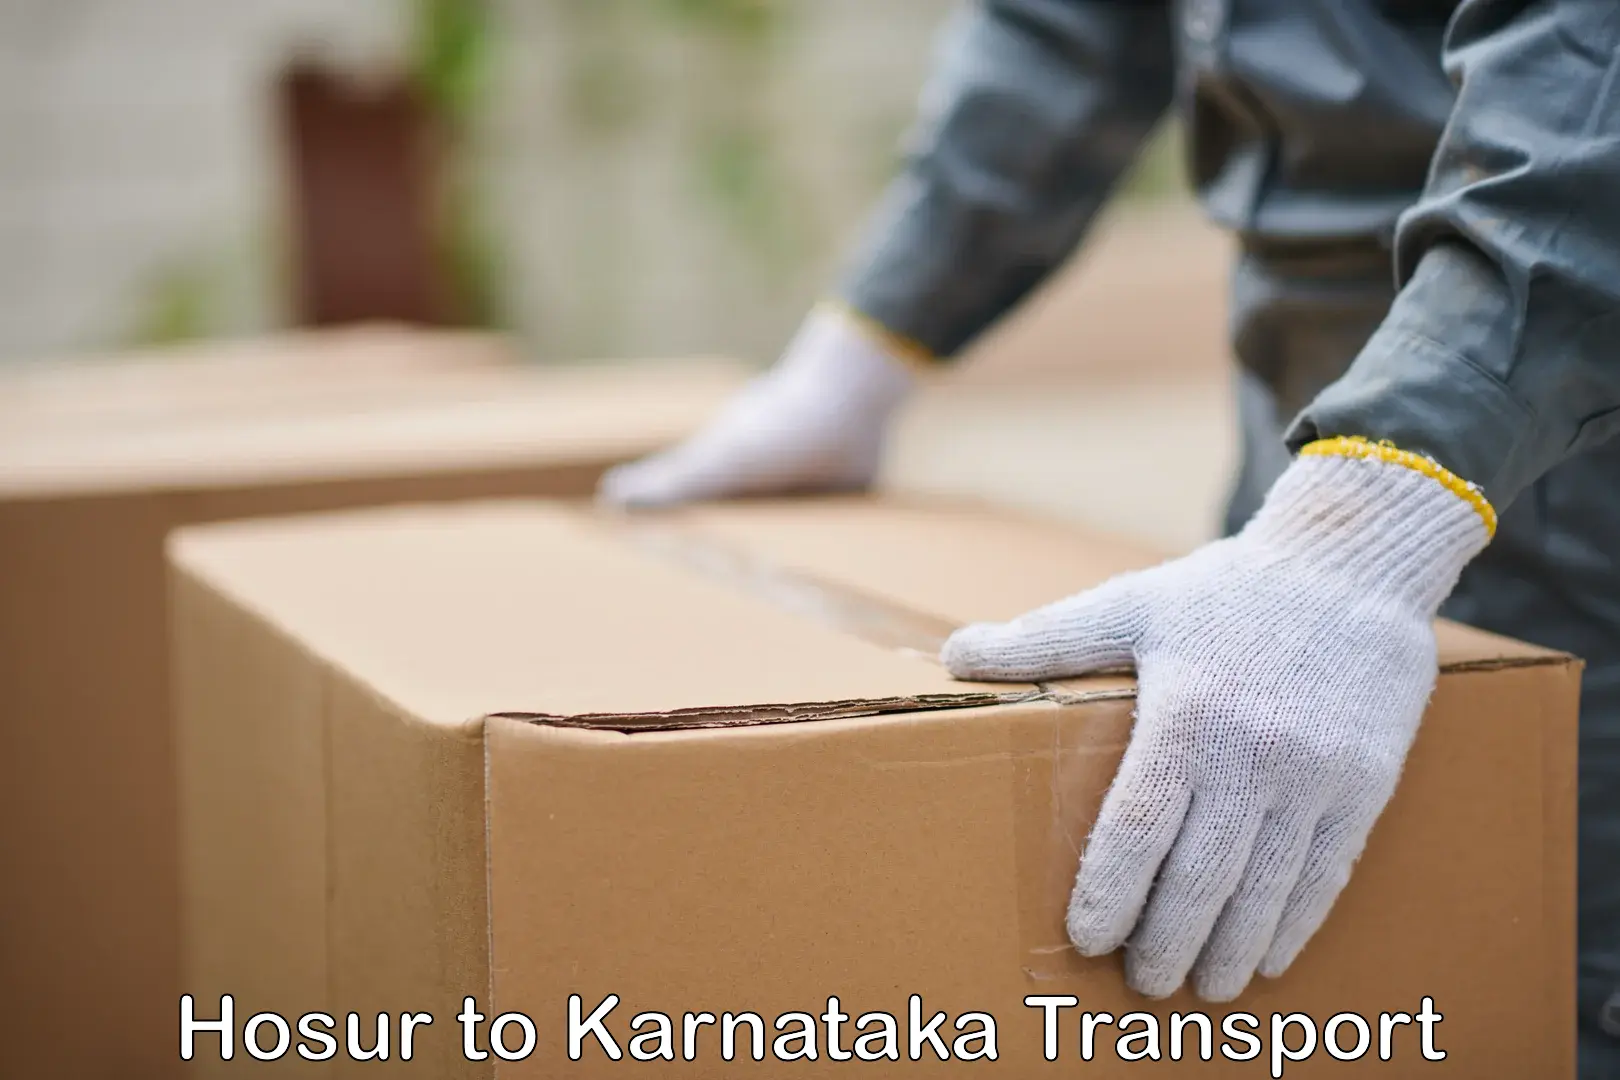 Delivery service Hosur to Karnataka